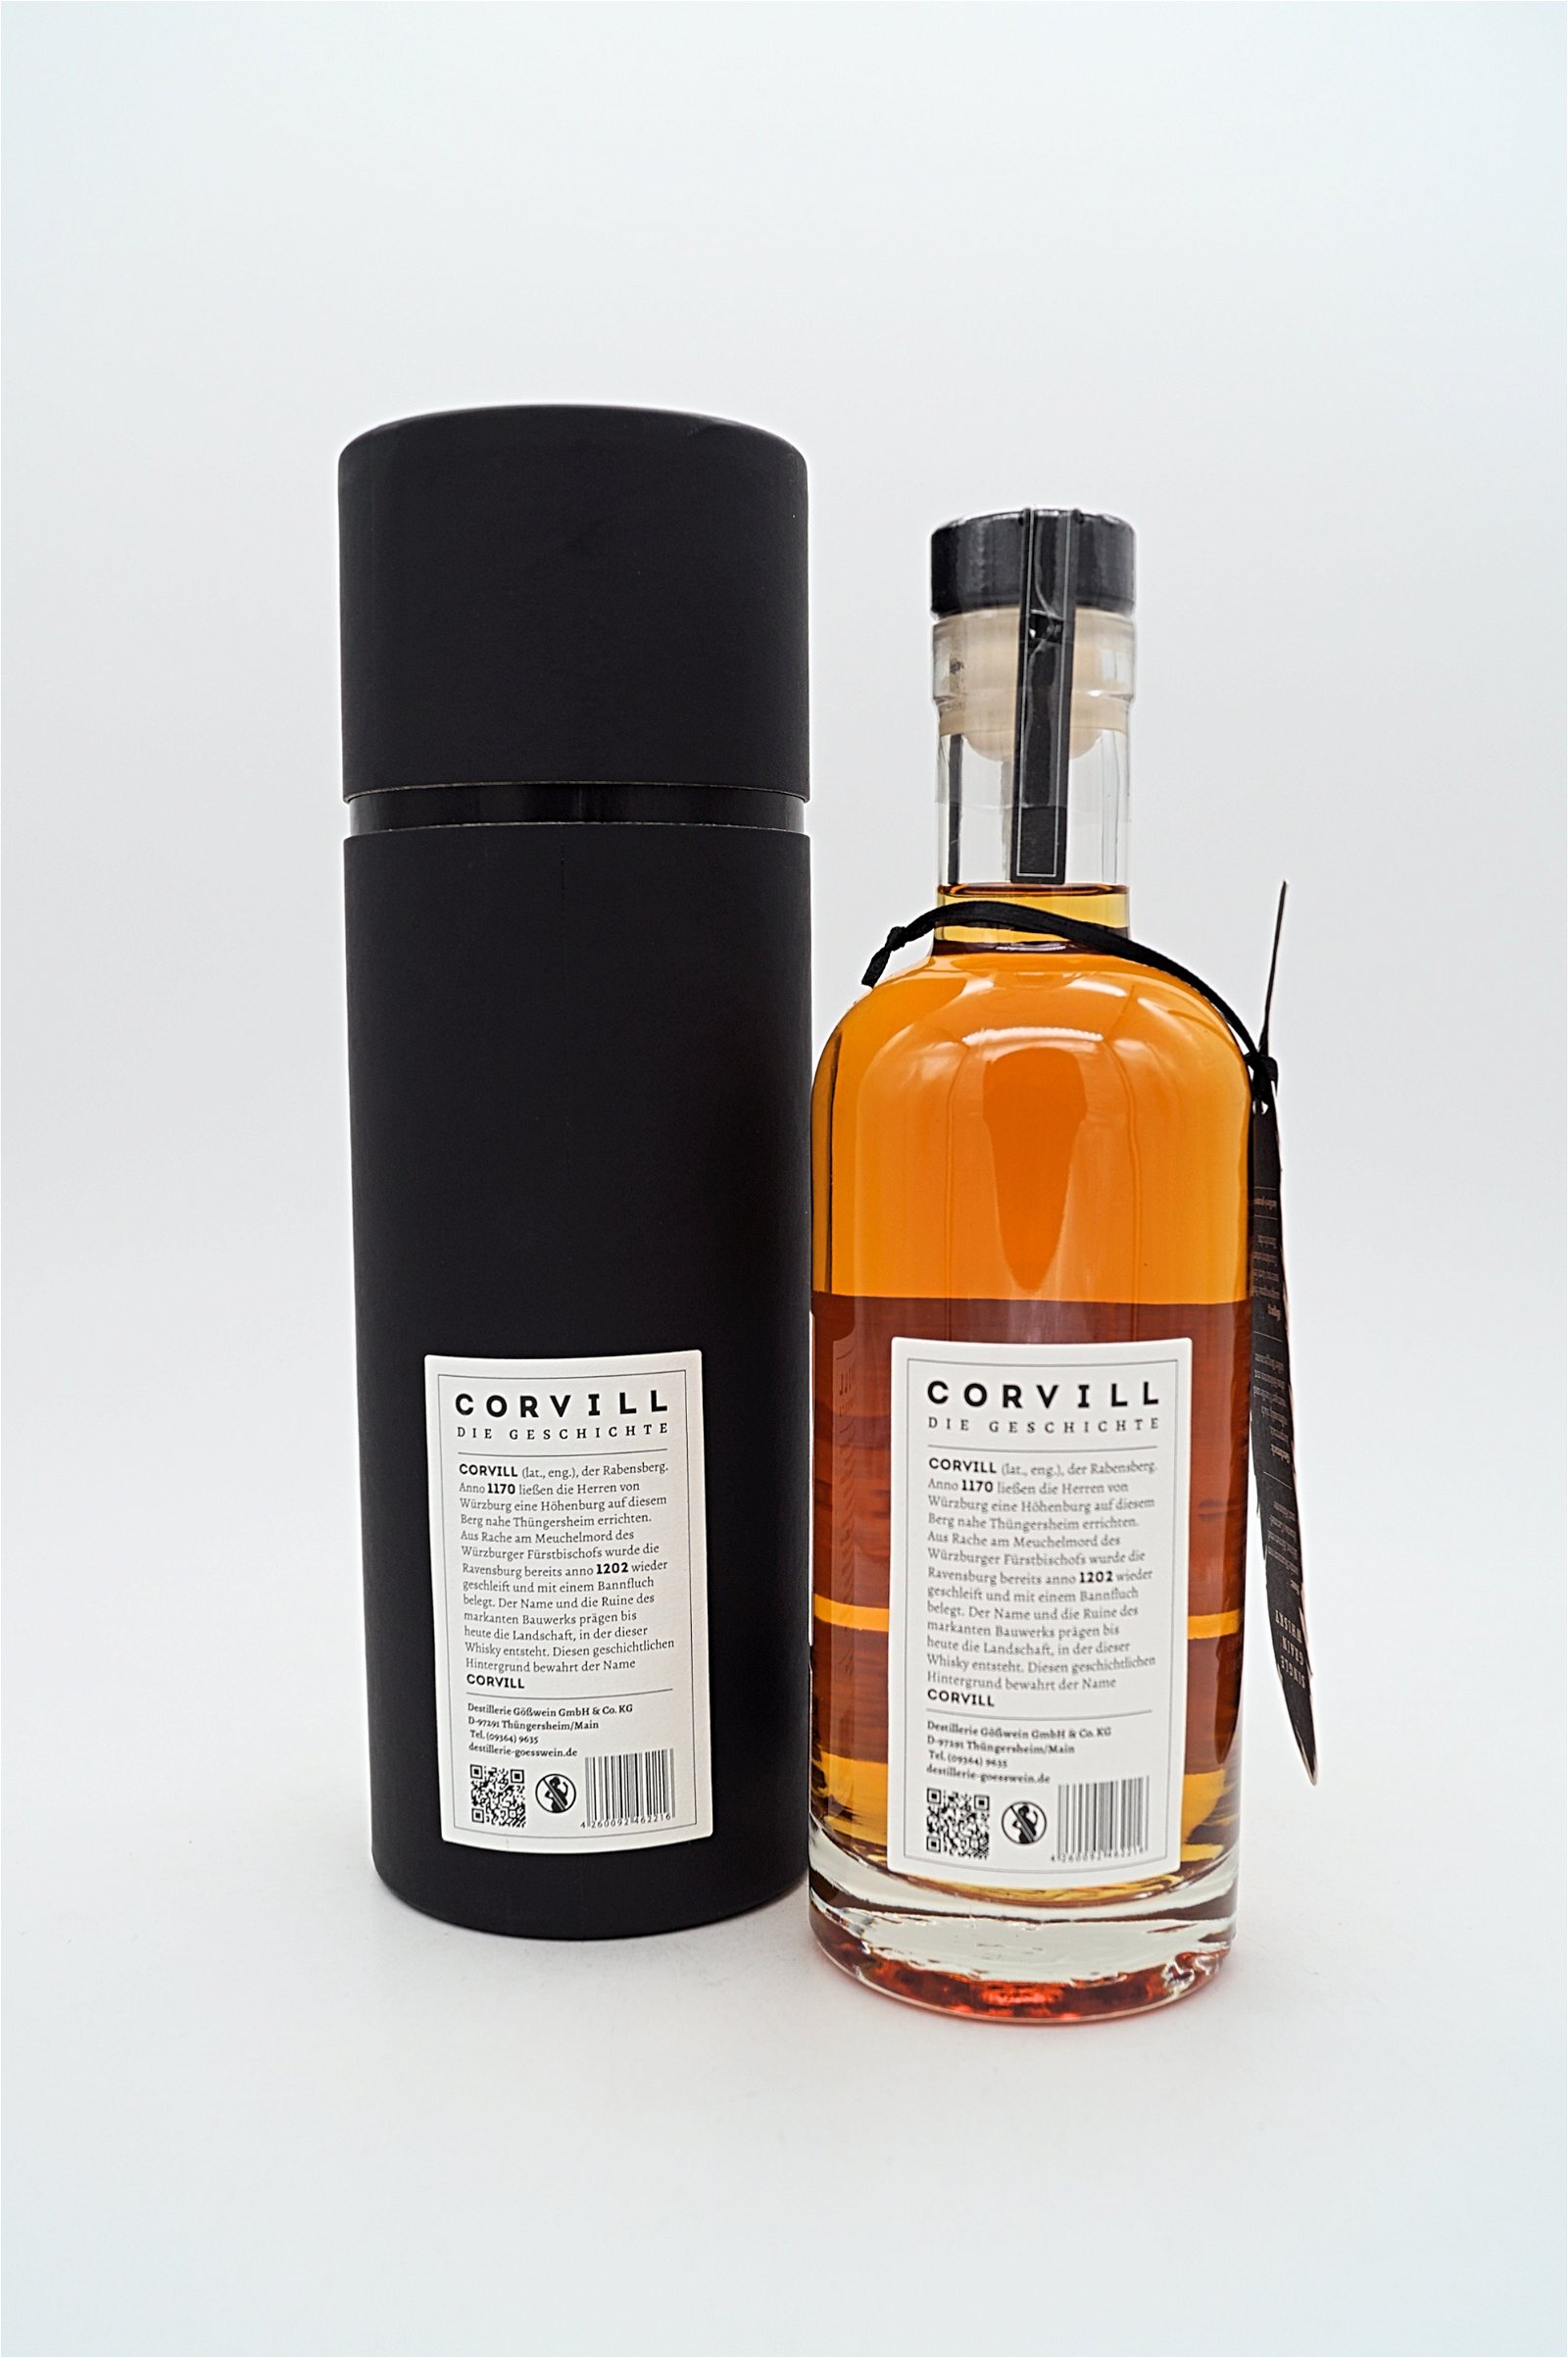 Edgar Gößwein Corvill Franconian Single Grain Whisky